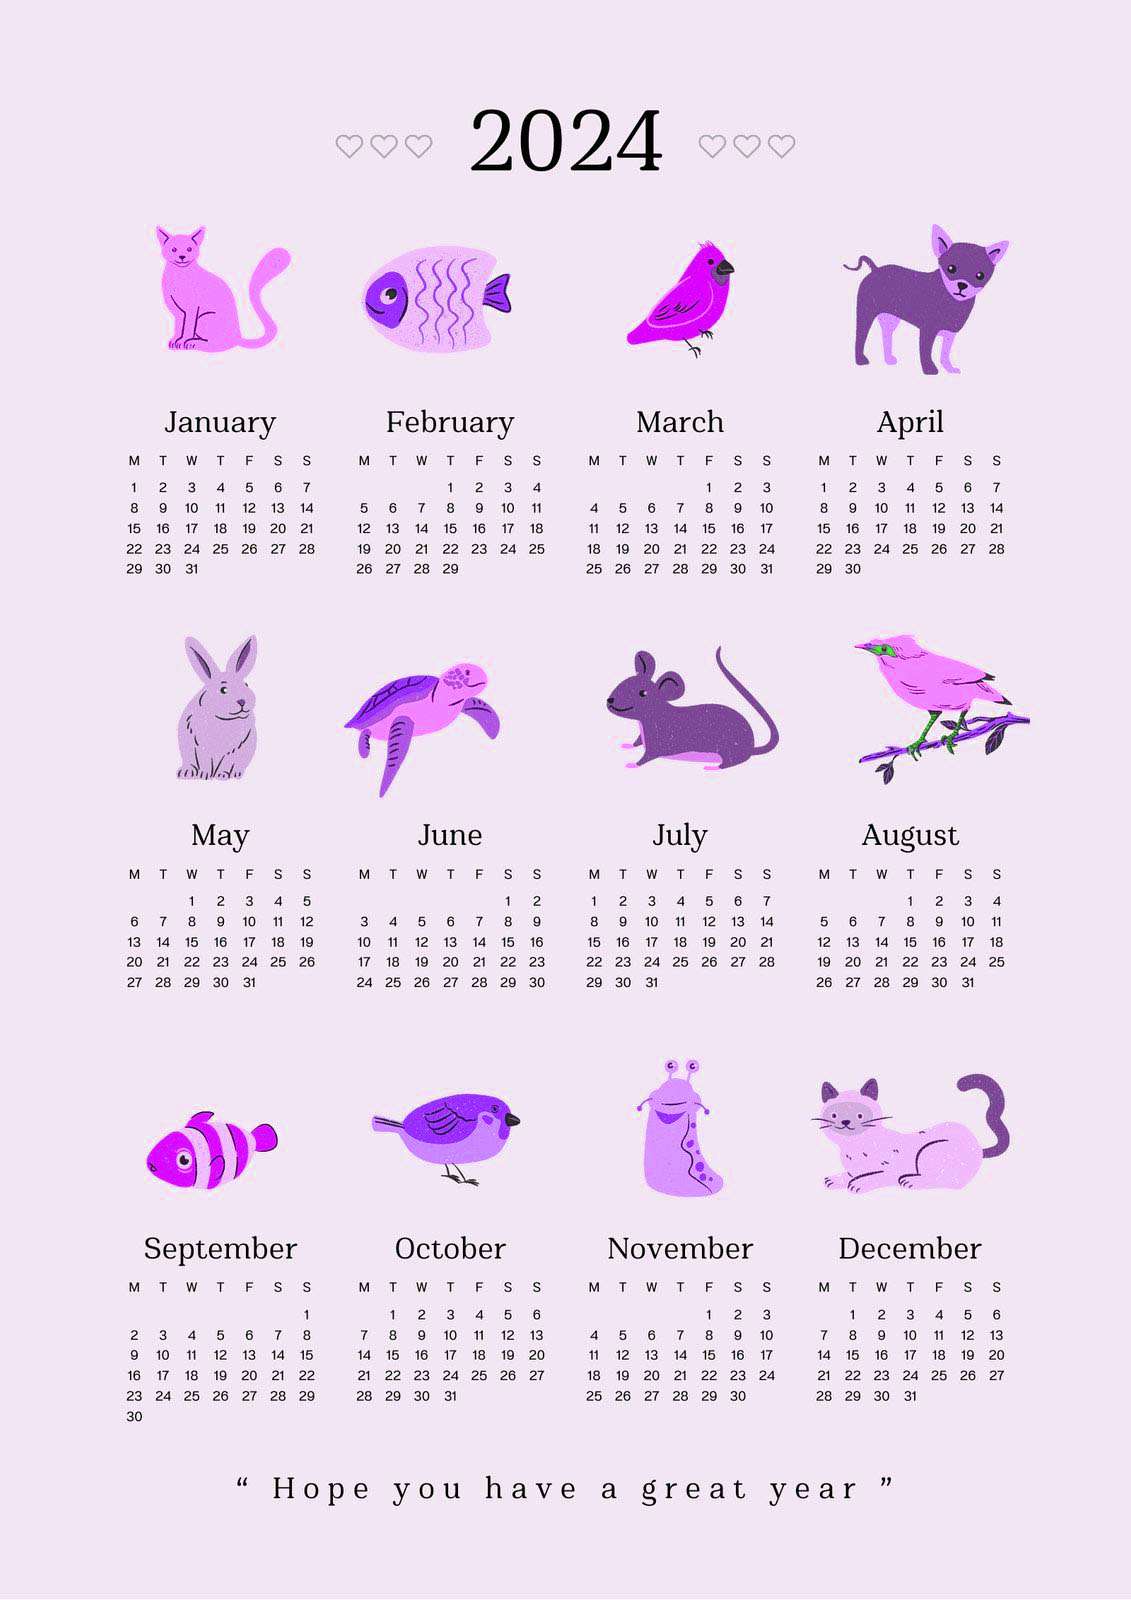 2024 Calendar Calendar Organizer